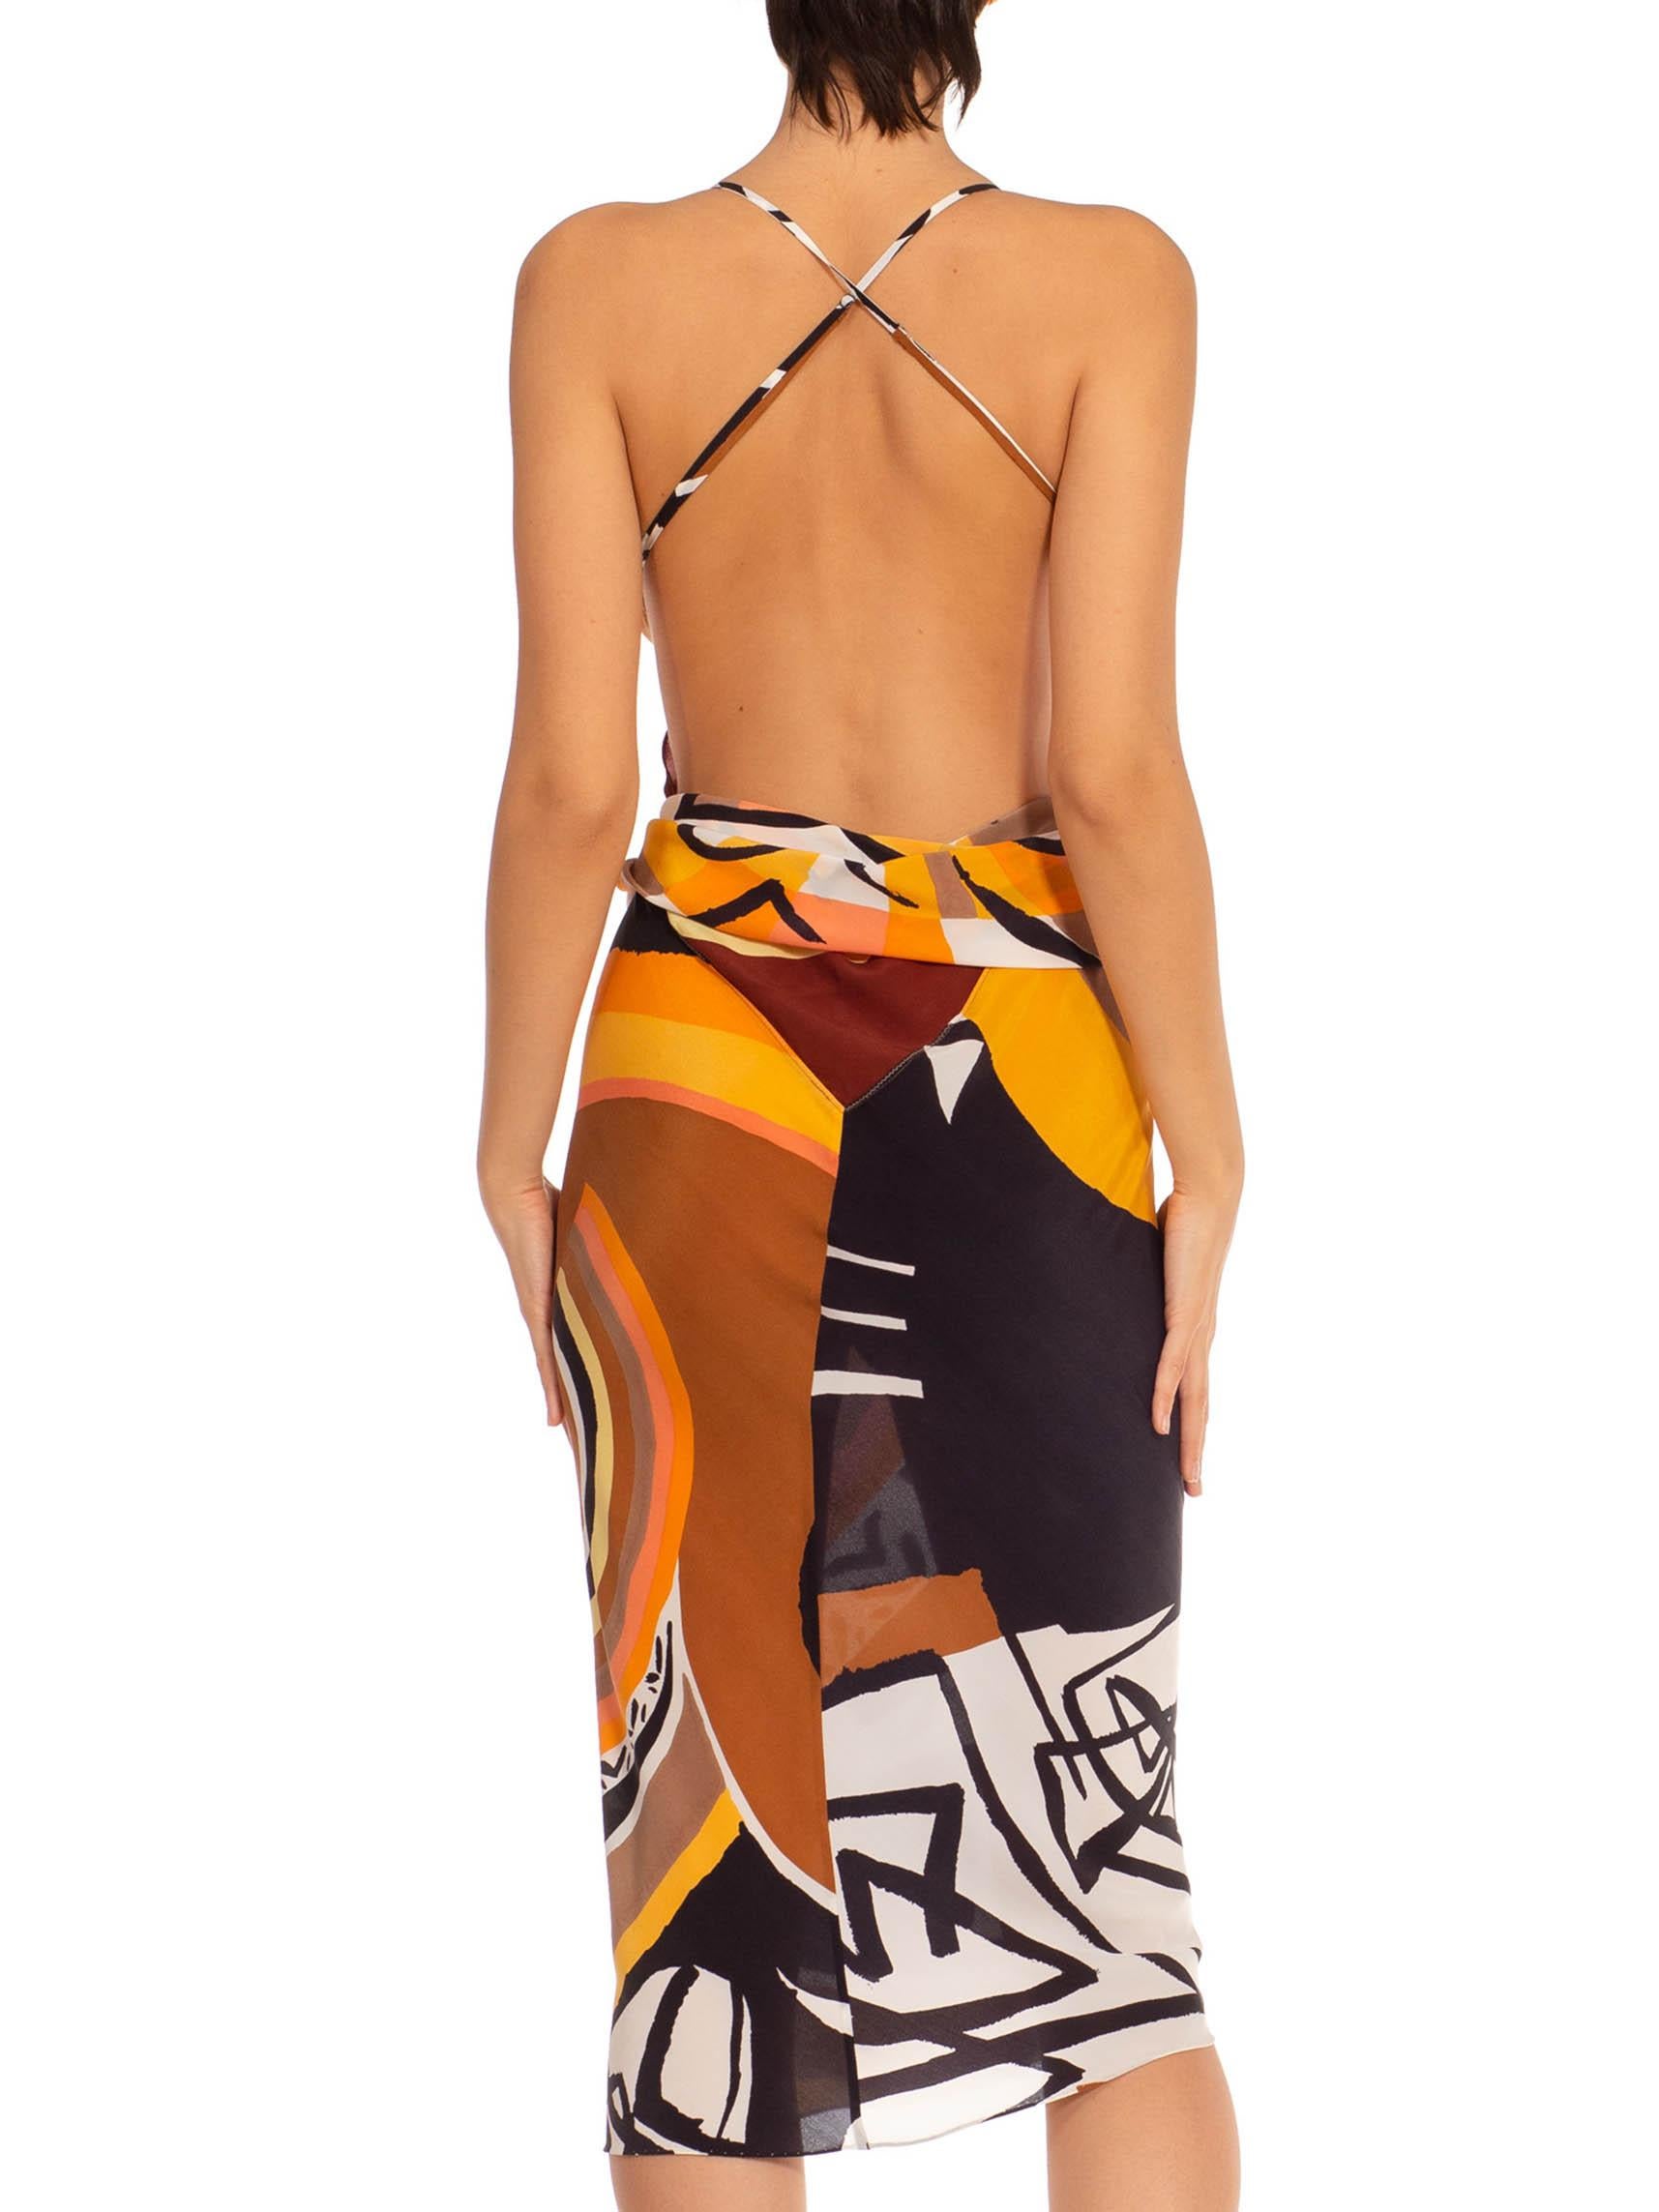 MORPHEW COLLECTION Brown & Orange Silk Twill Sagittarius Scarf Dress Made From  3